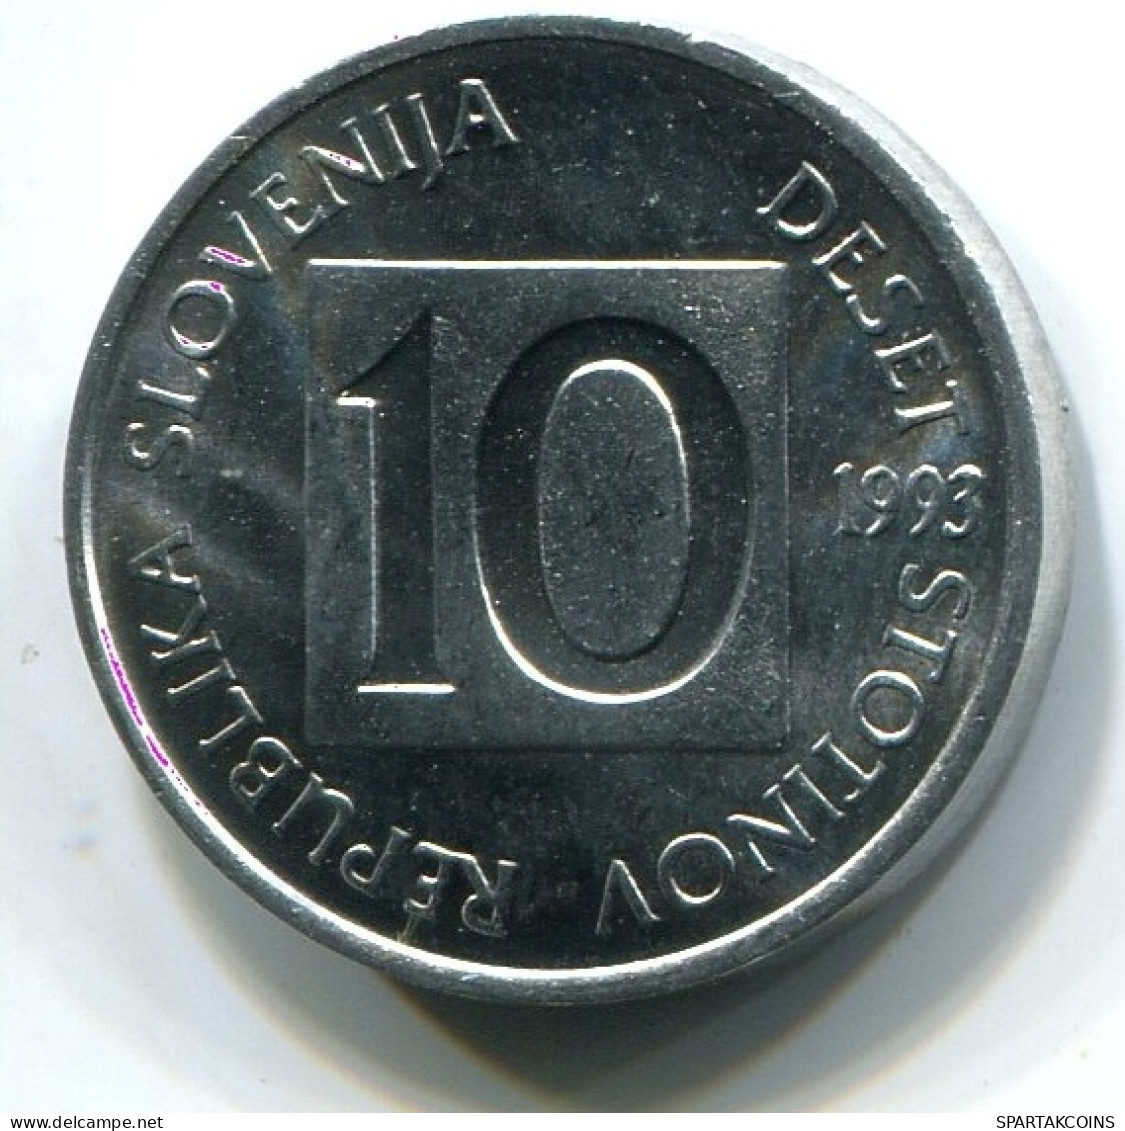 10 TOLAR 1993 SLOVENIA UNC The Salamander Coin #W10916.U - Slovenië